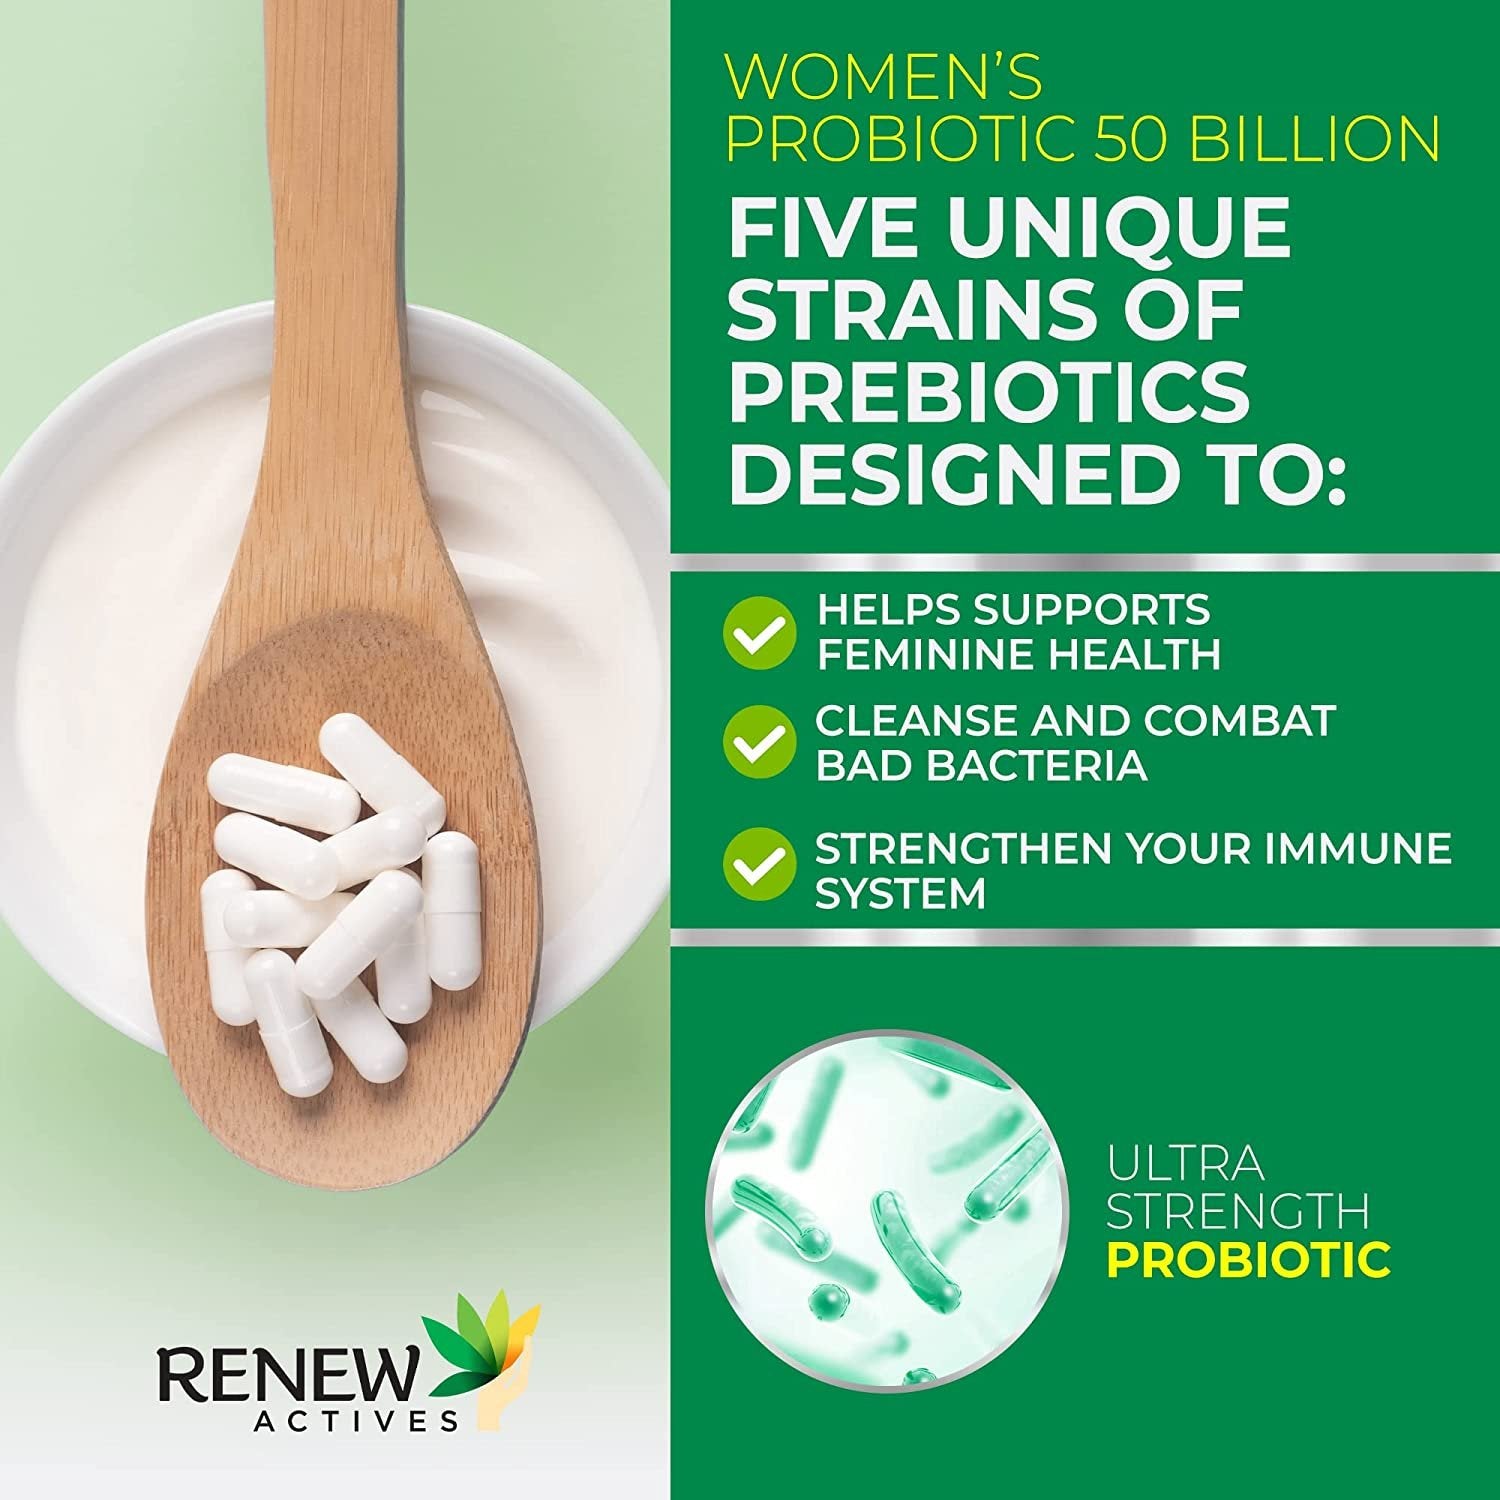 Renew Actives 50 Billion Probiotics for Women with MAKTREK Bi-Pass Technology